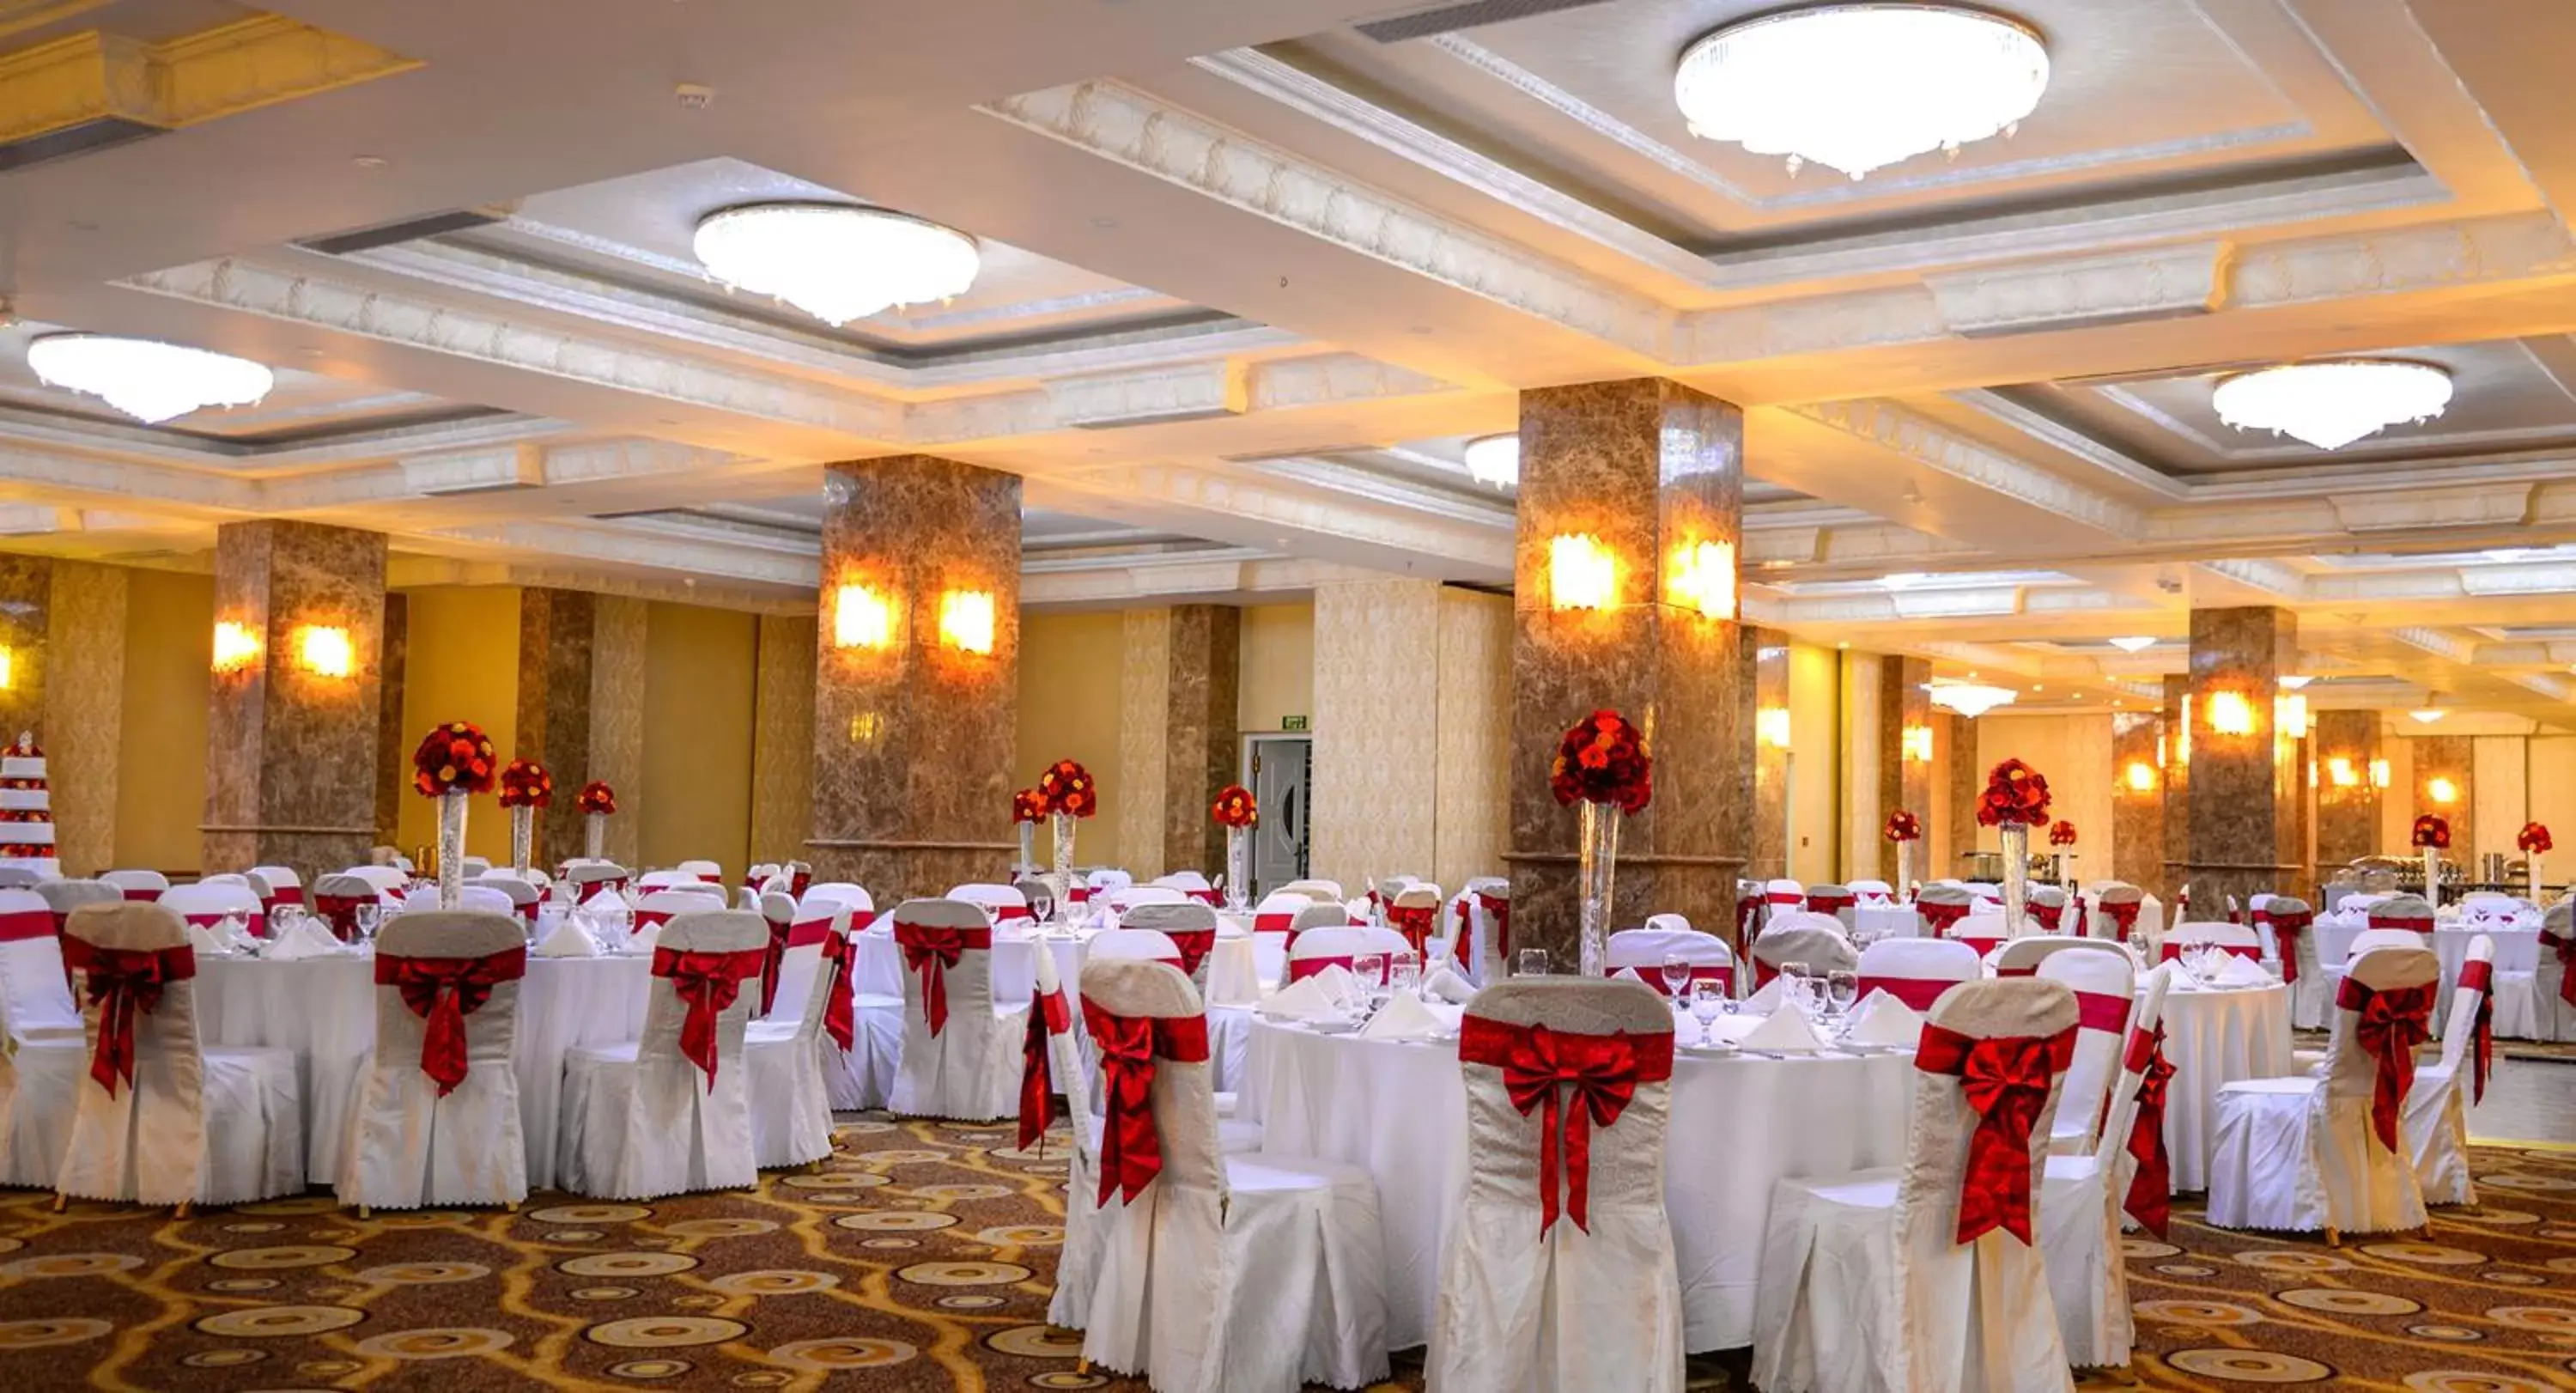 Banquet/Function facilities, Banquet Facilities in The Grand Kandyan